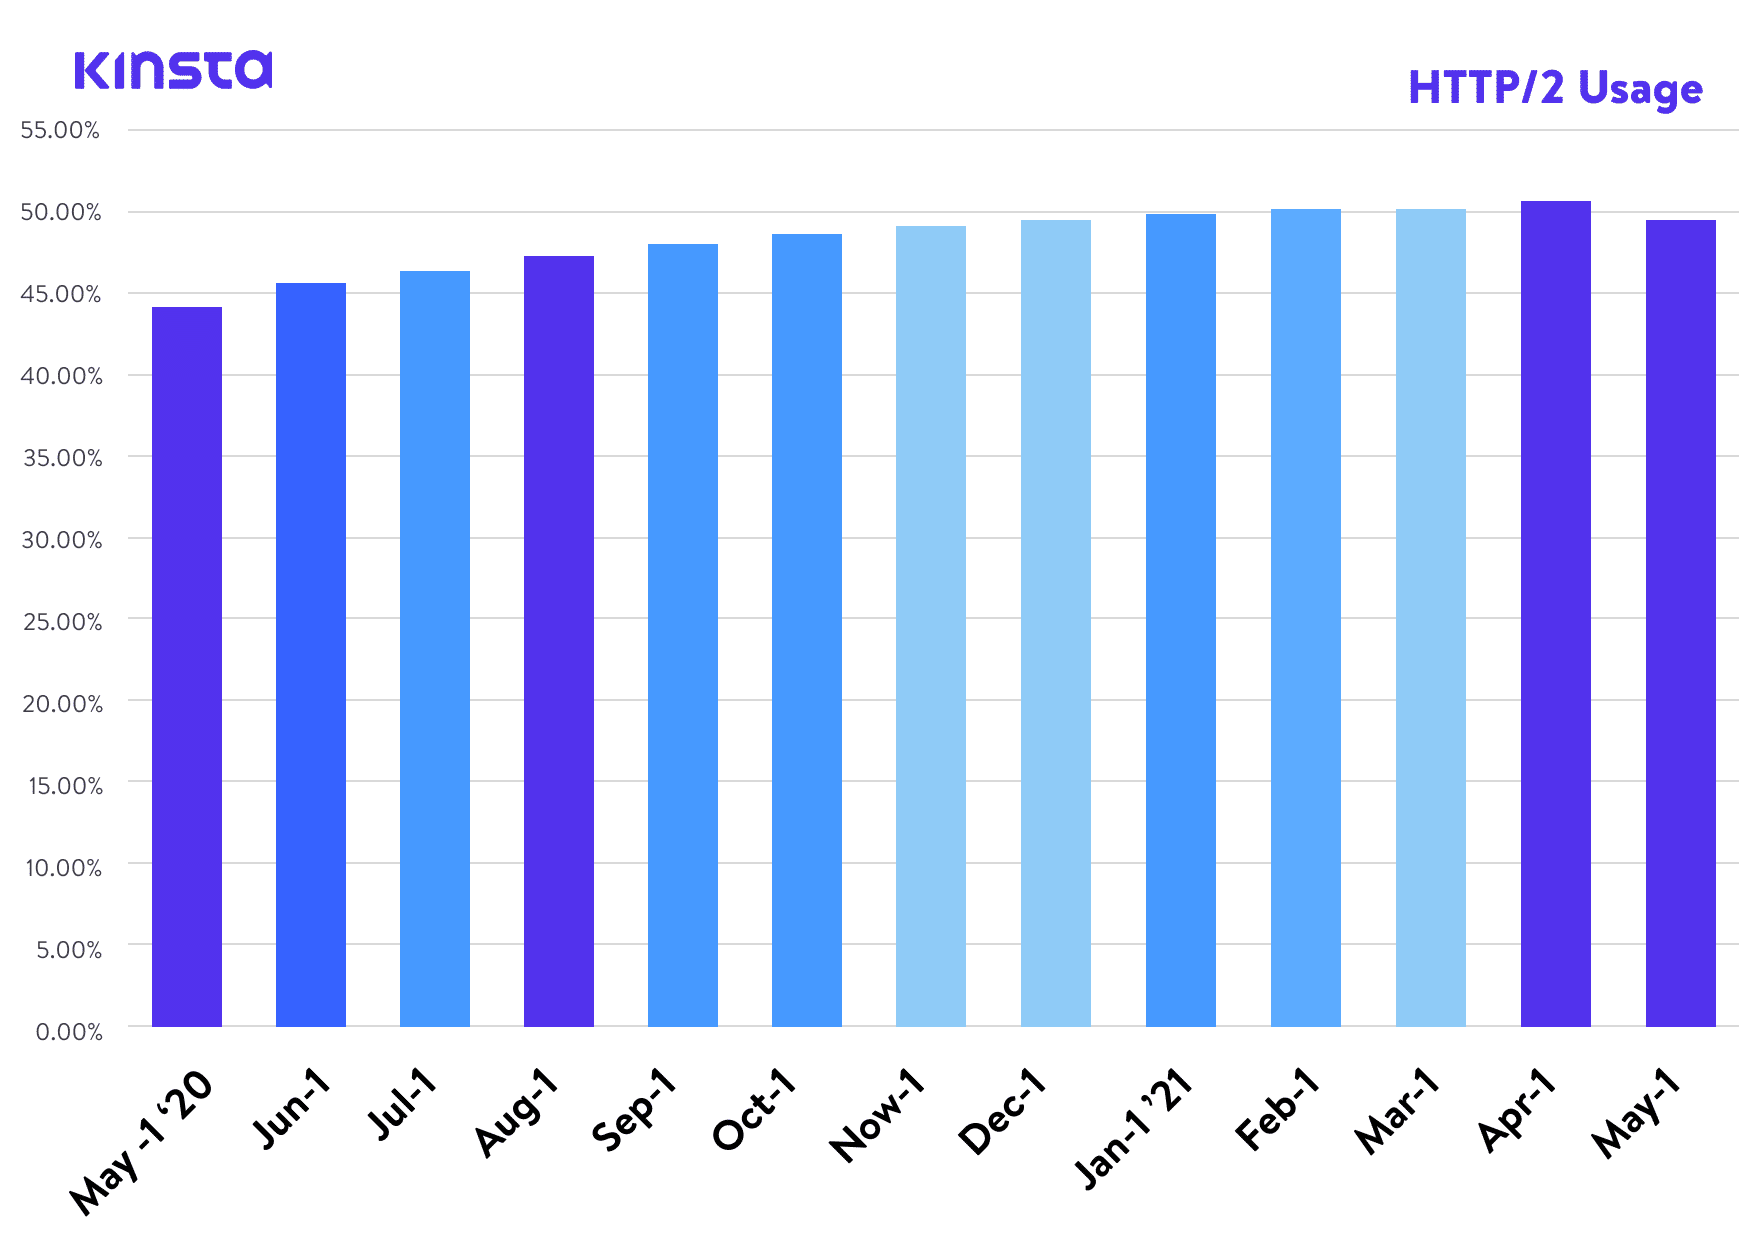 HTTP/2 adoption trend